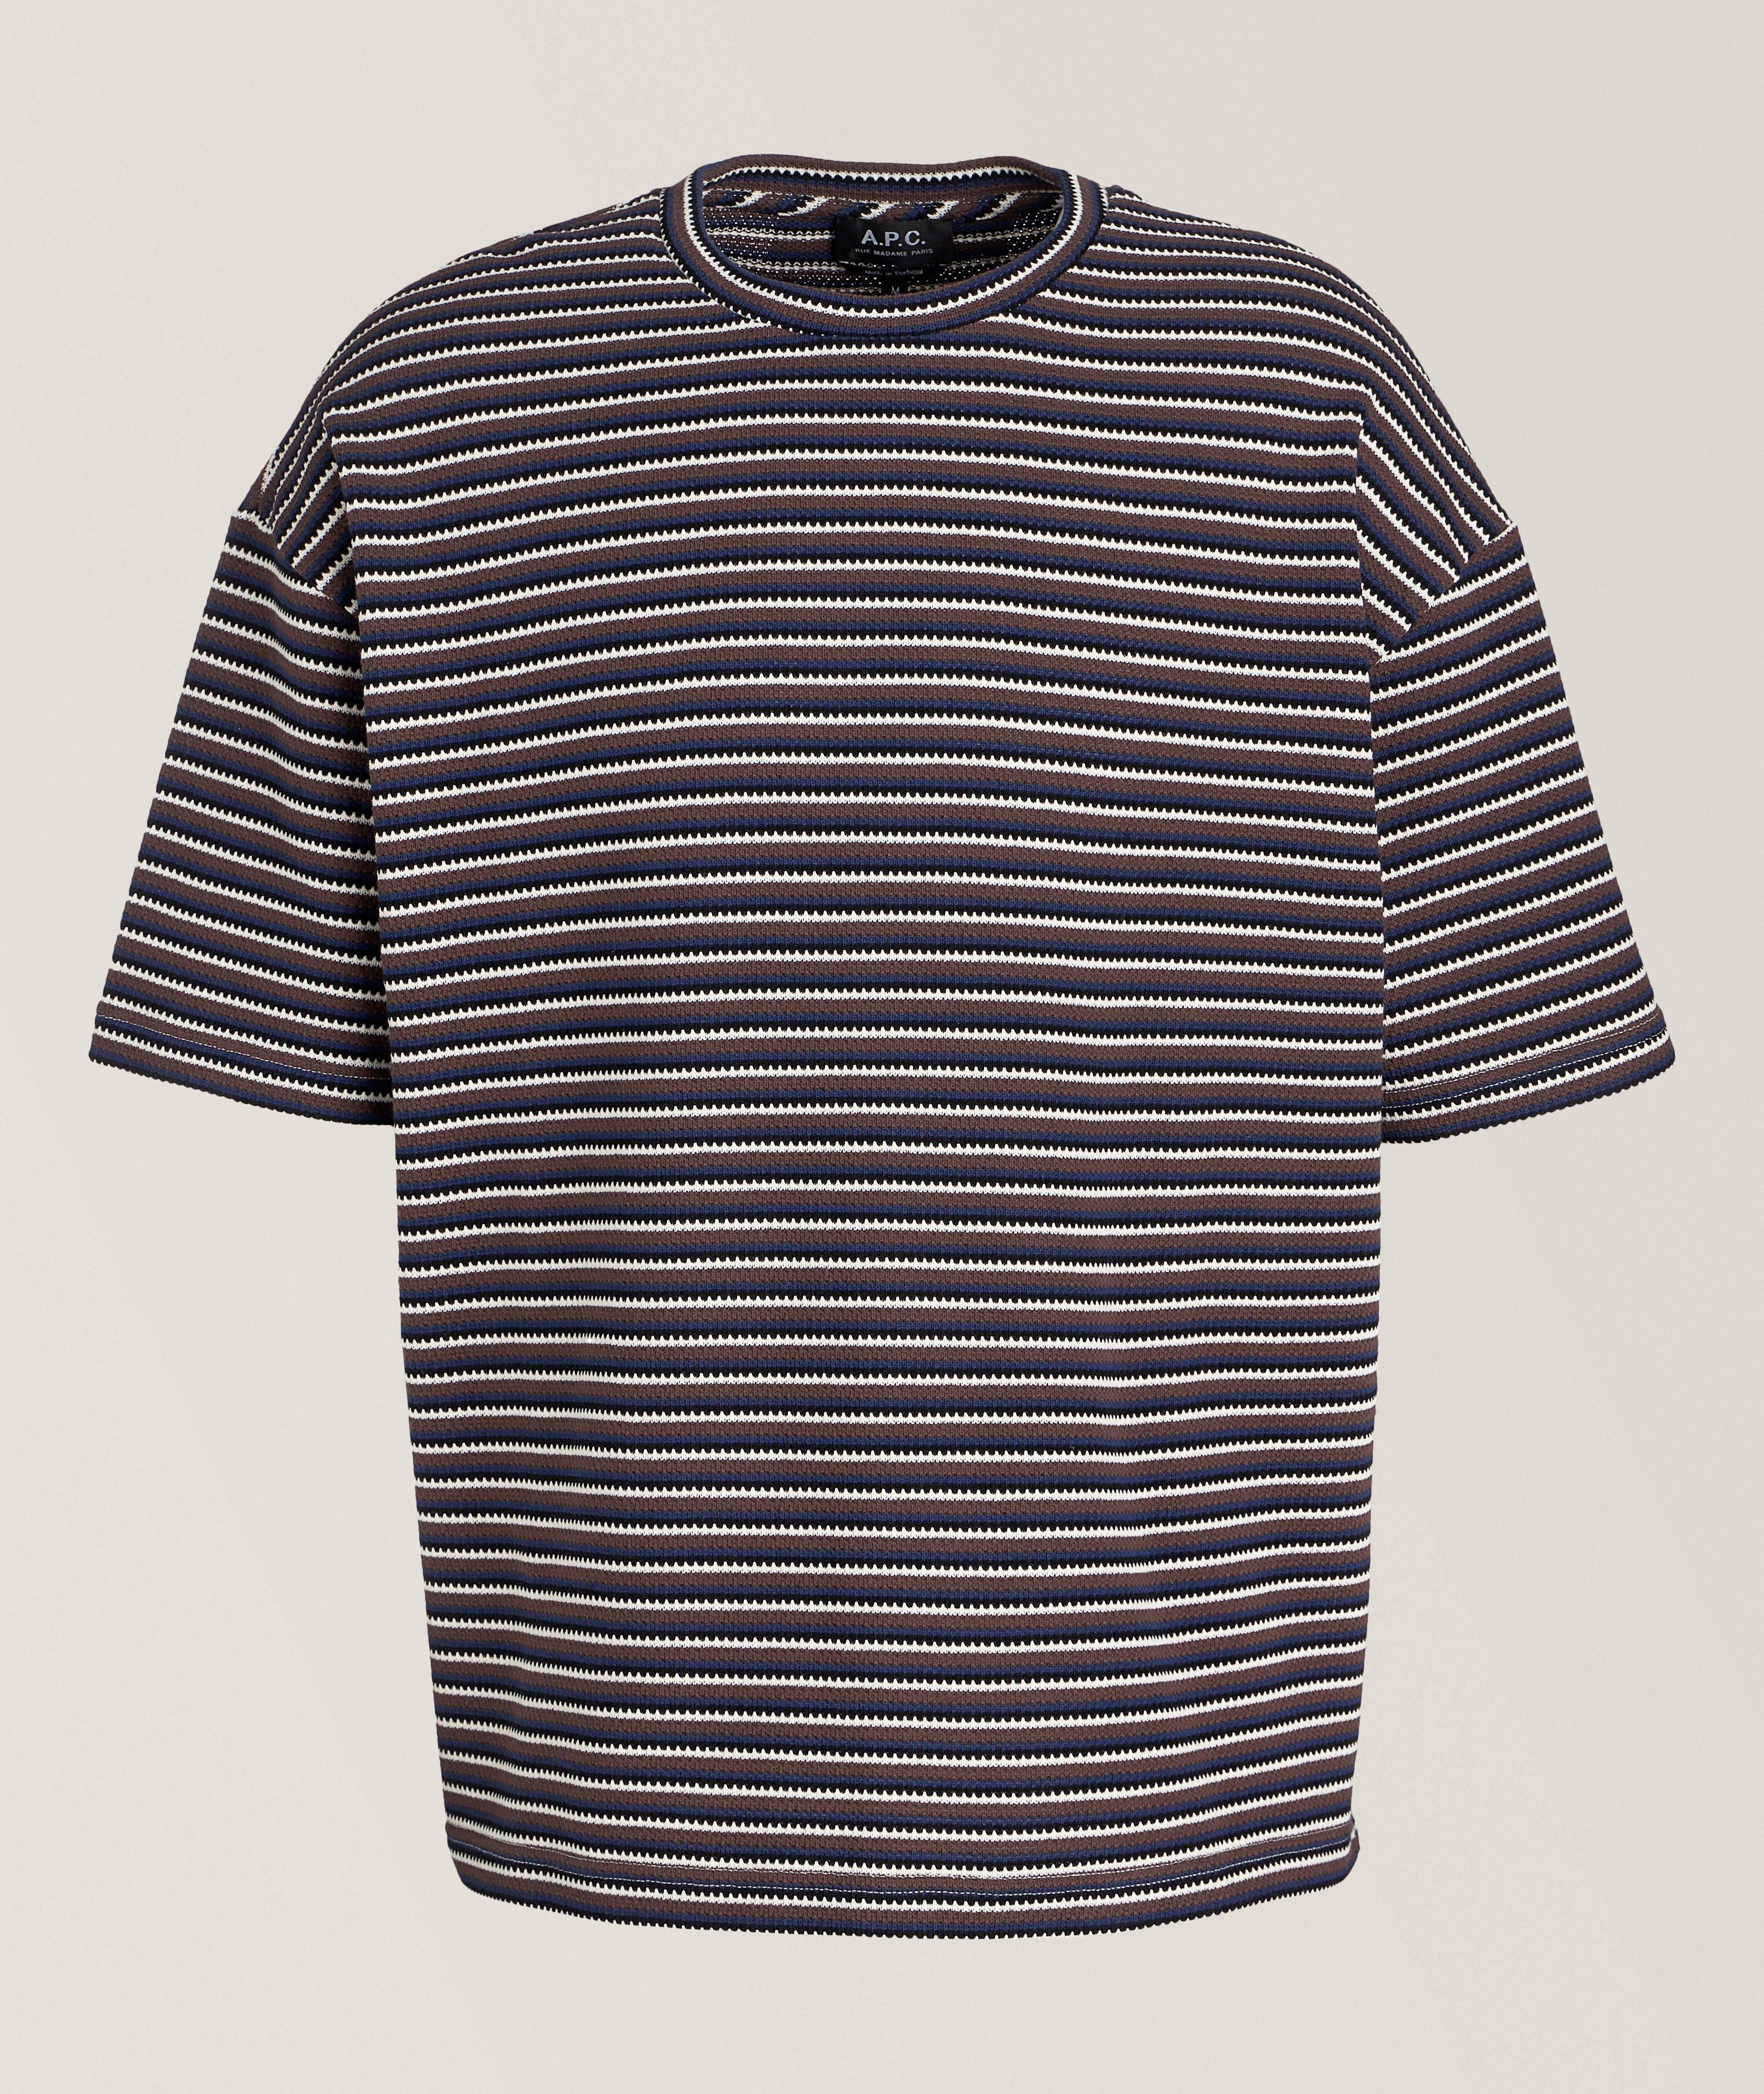 Bahia Multi-Striped Organic Cotton T-Shirt image 0